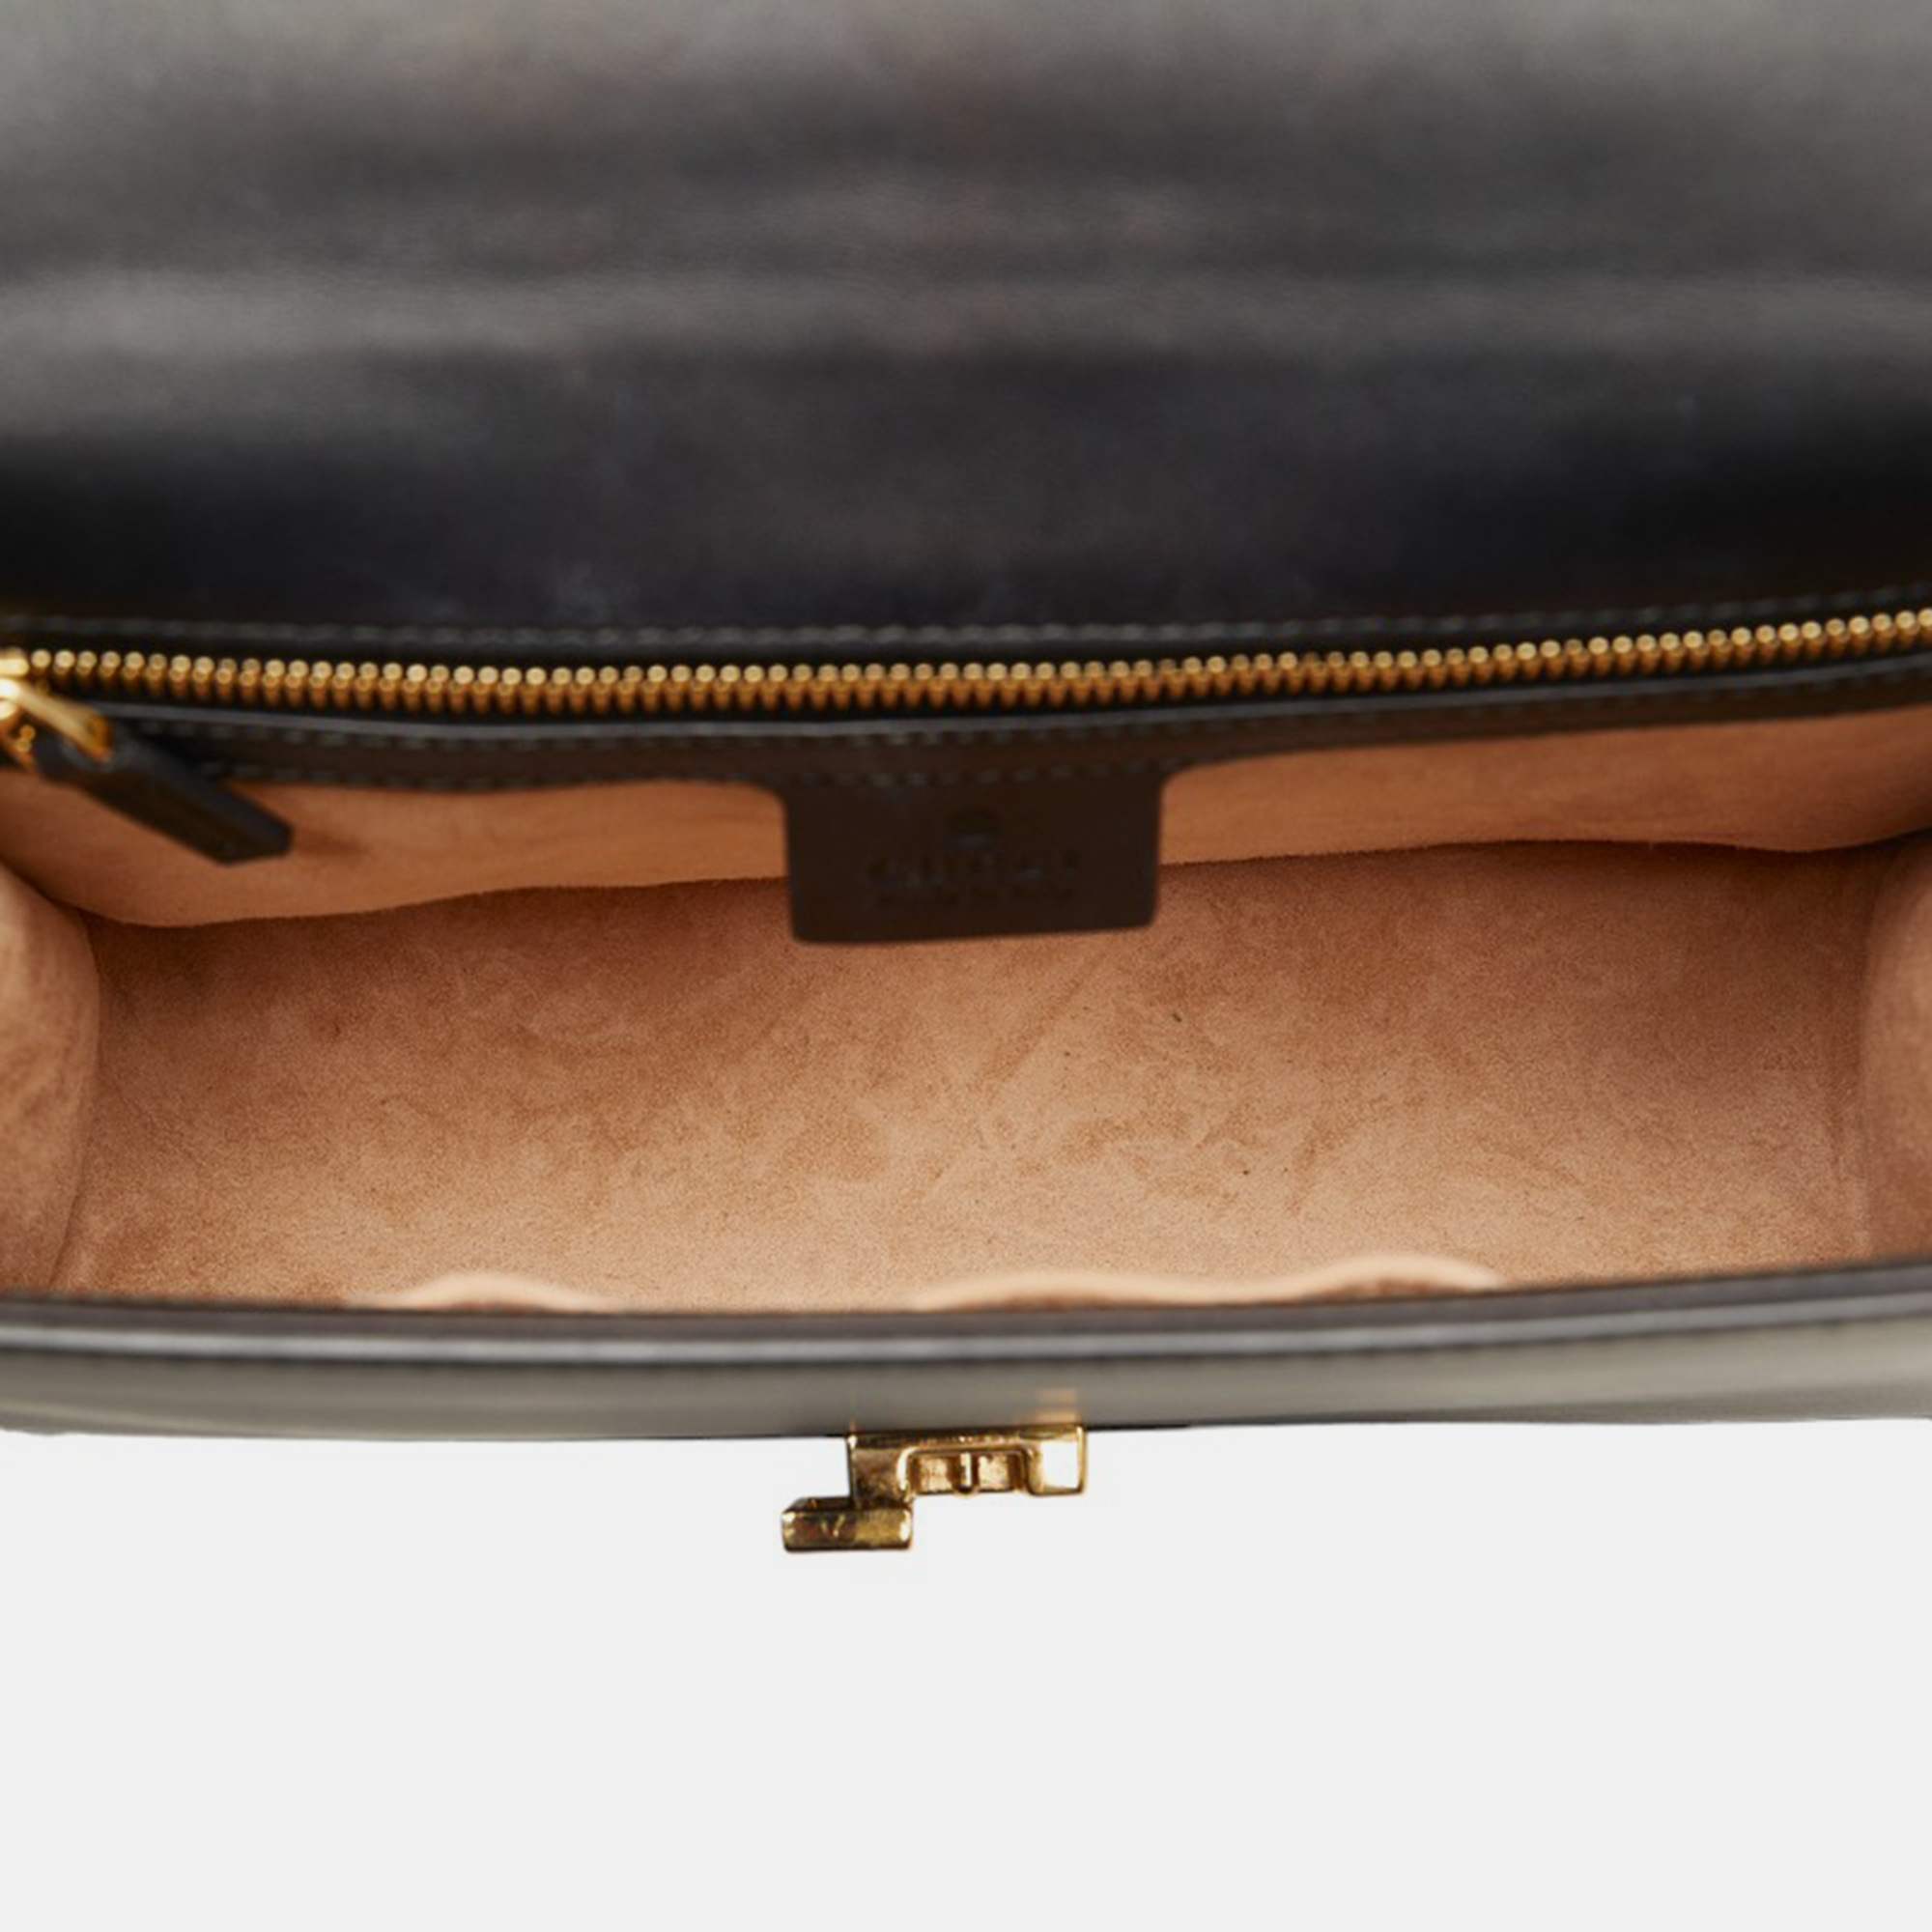 Gucci Black Leather Small Sylvie Shoulder Bag